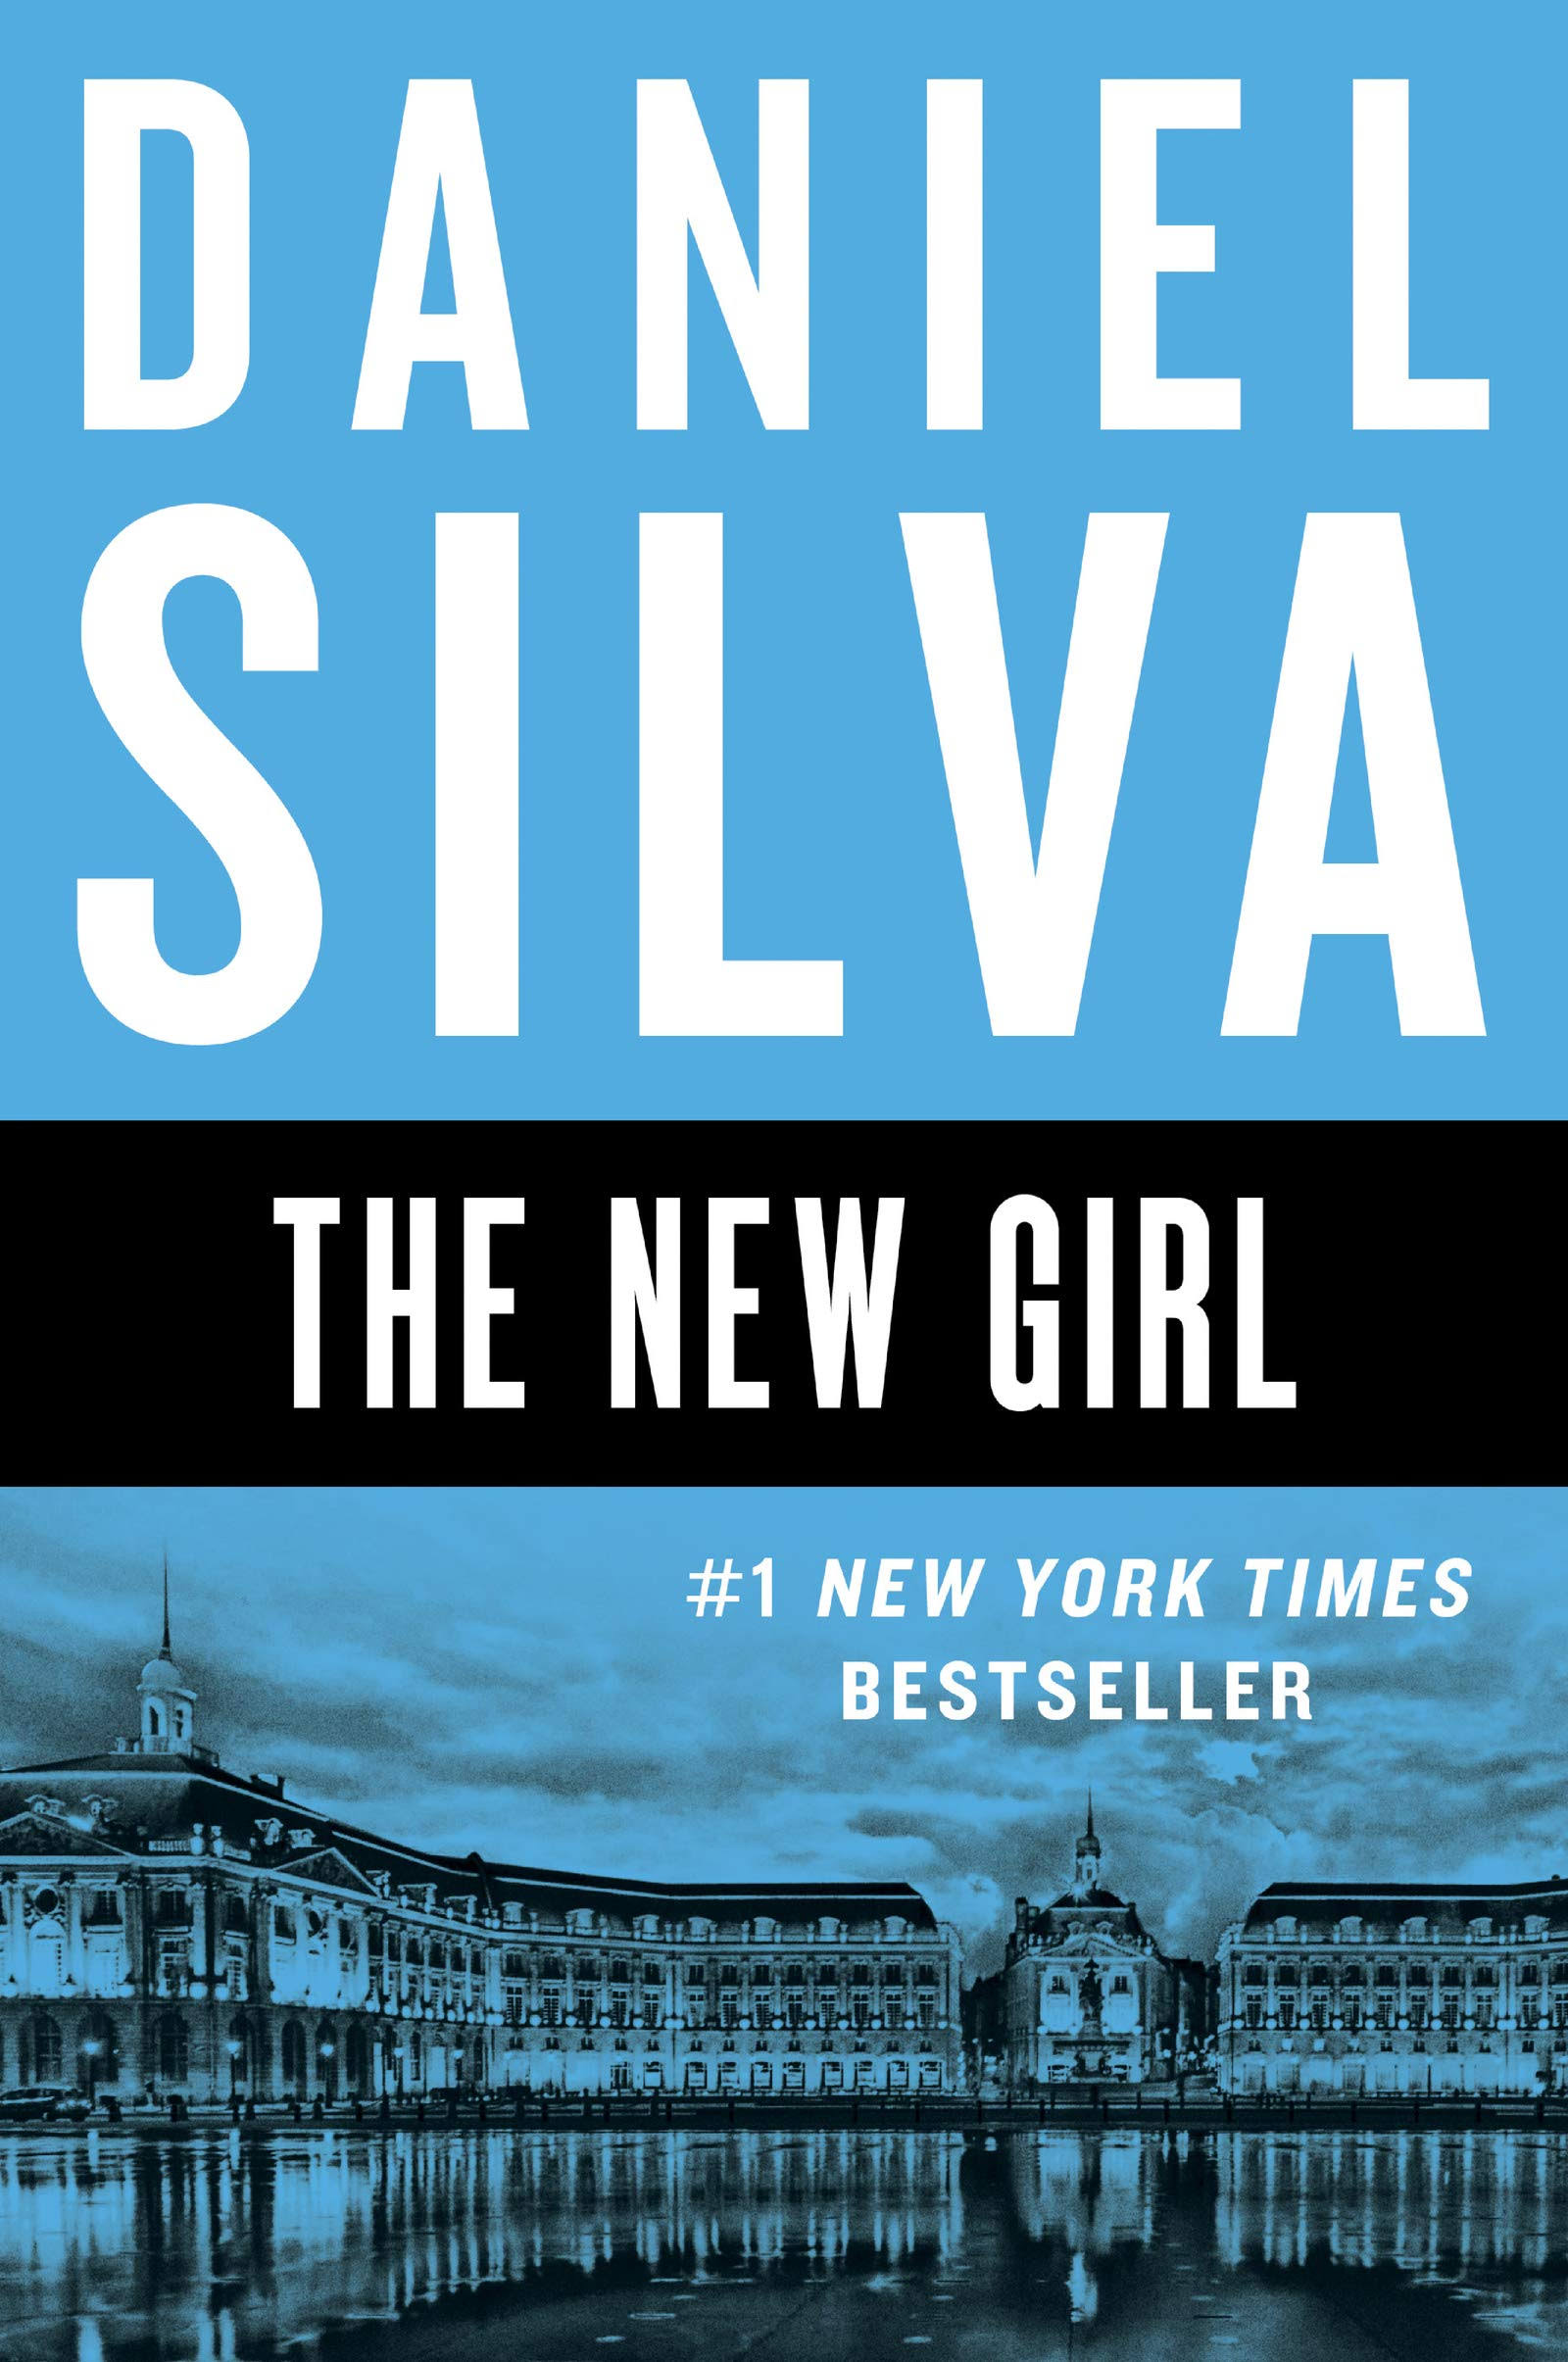 The New Girl by Daniel Silva